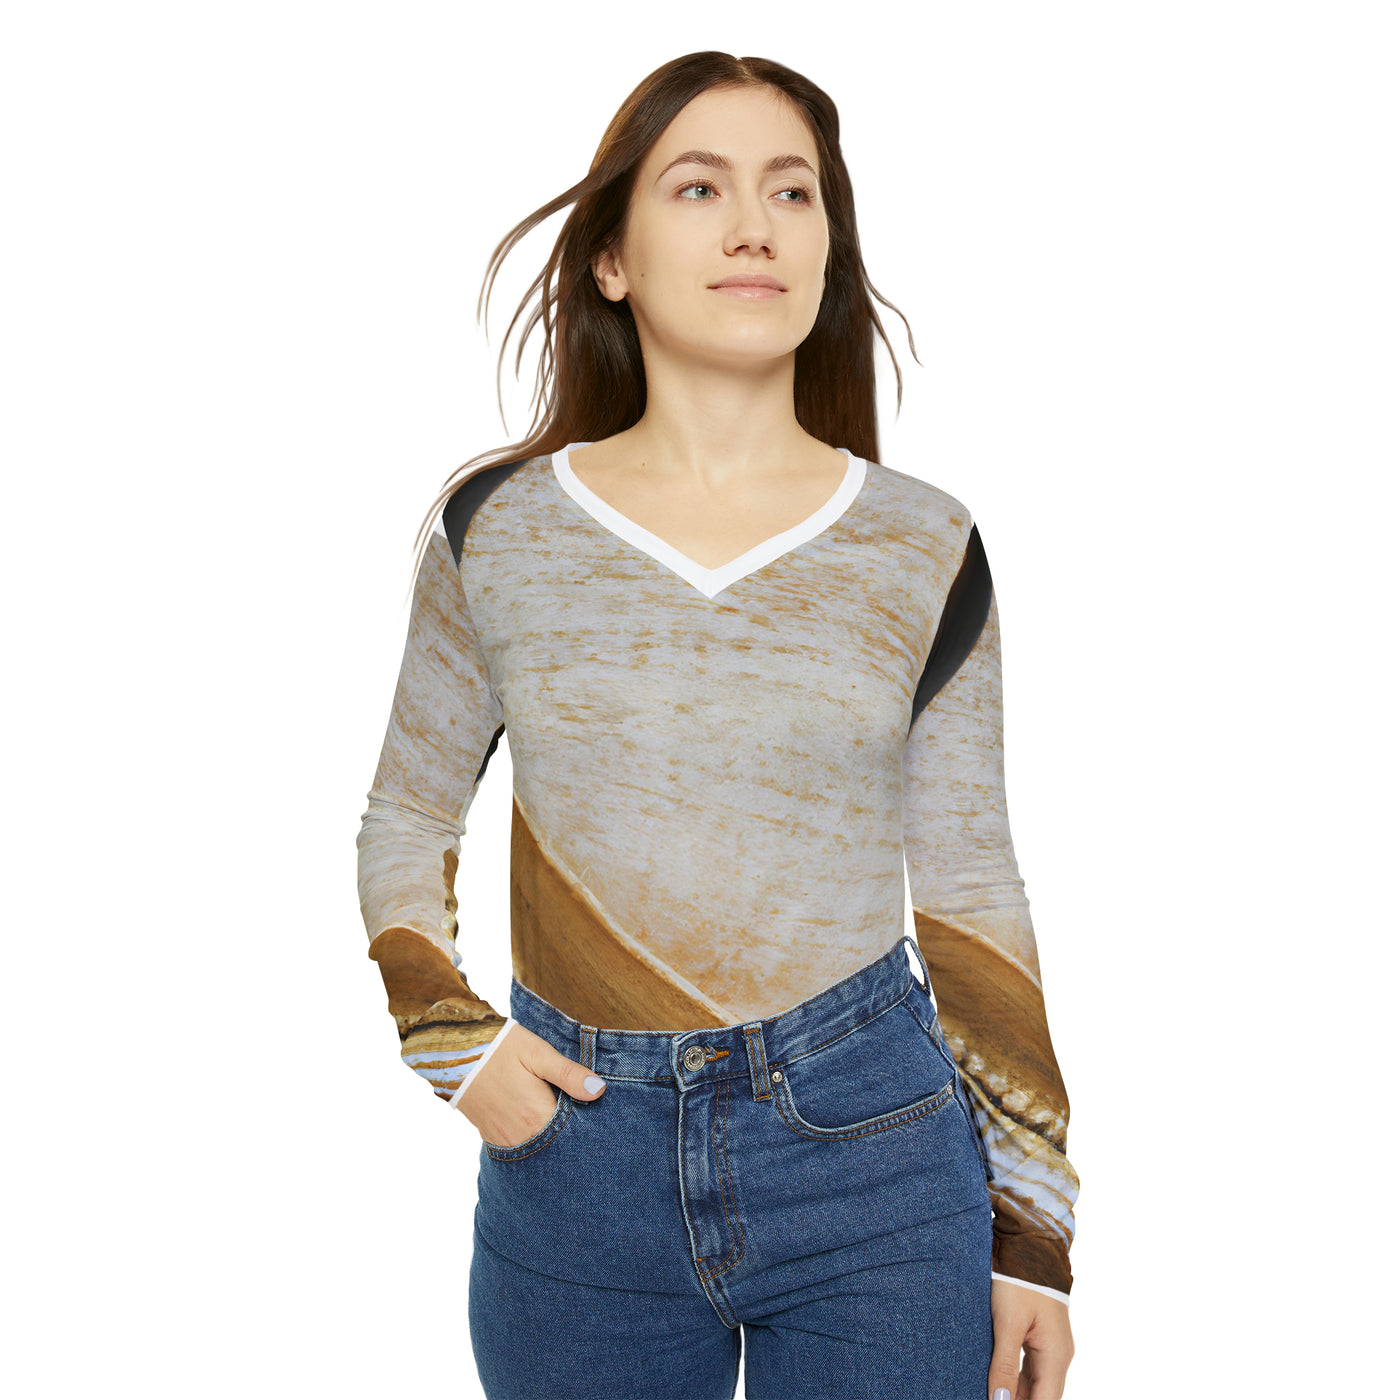 Erupting Colors of Joy Women's Long Sleeve V-neck Shirt